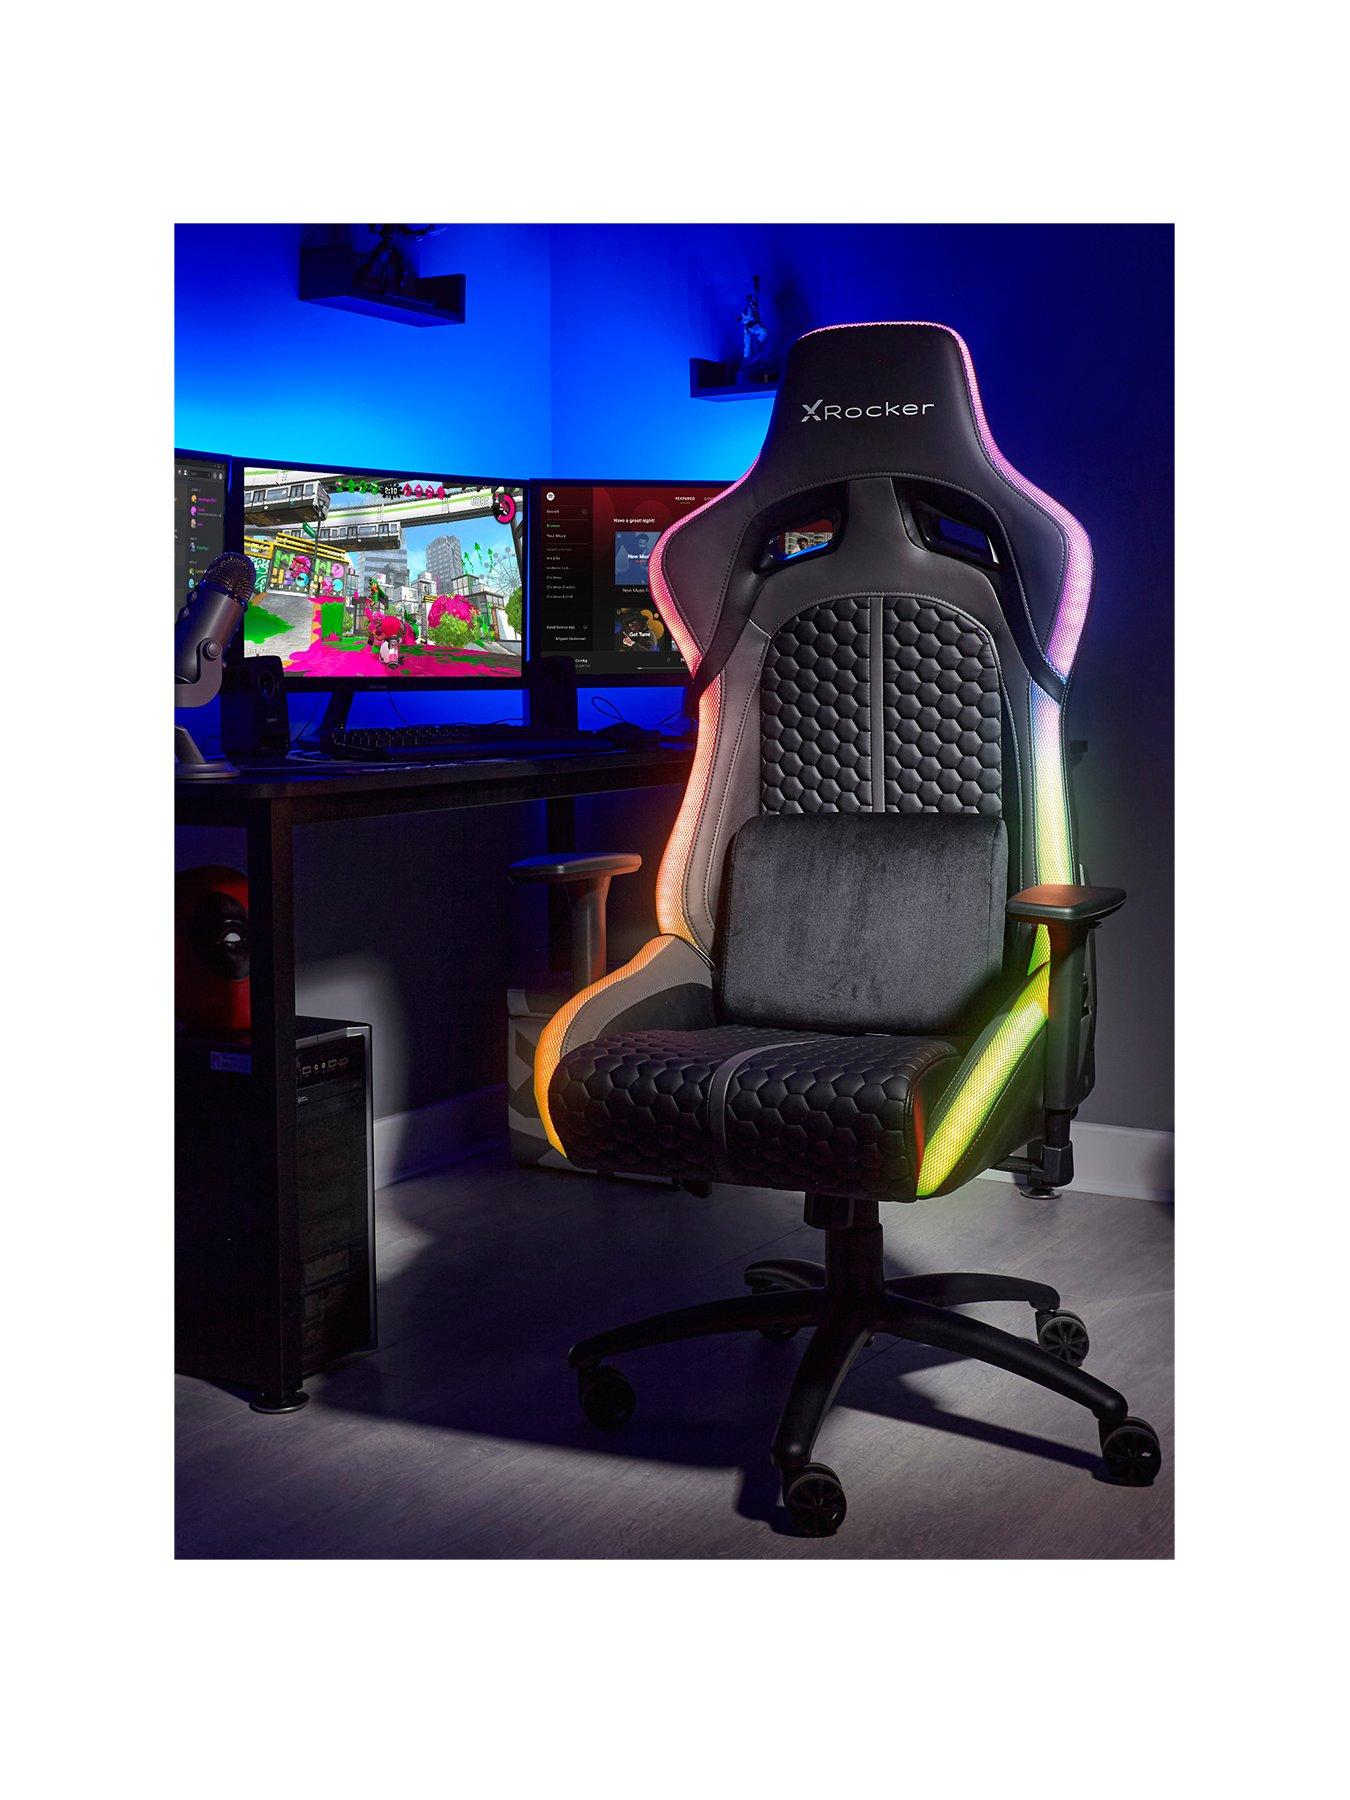 Ellendig Gloed pastel PC Gaming | X rocker | Gaming chairs | Gaming & dvd | Very Ireland